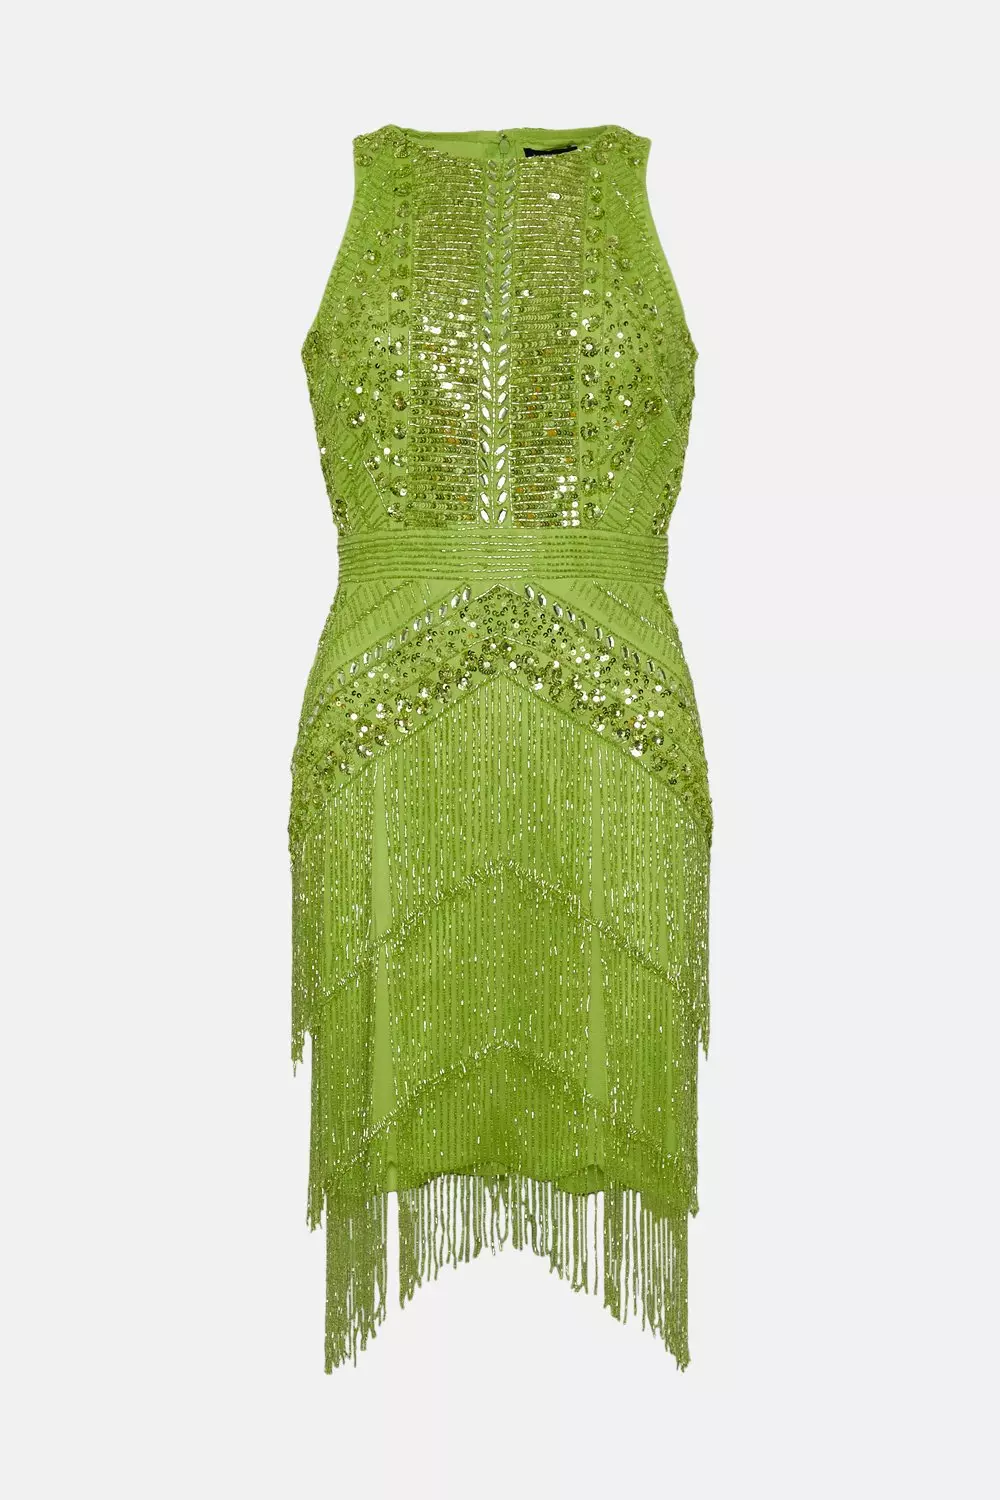 Namu Shop - Babaco Small Fringe Dress - Dark Green